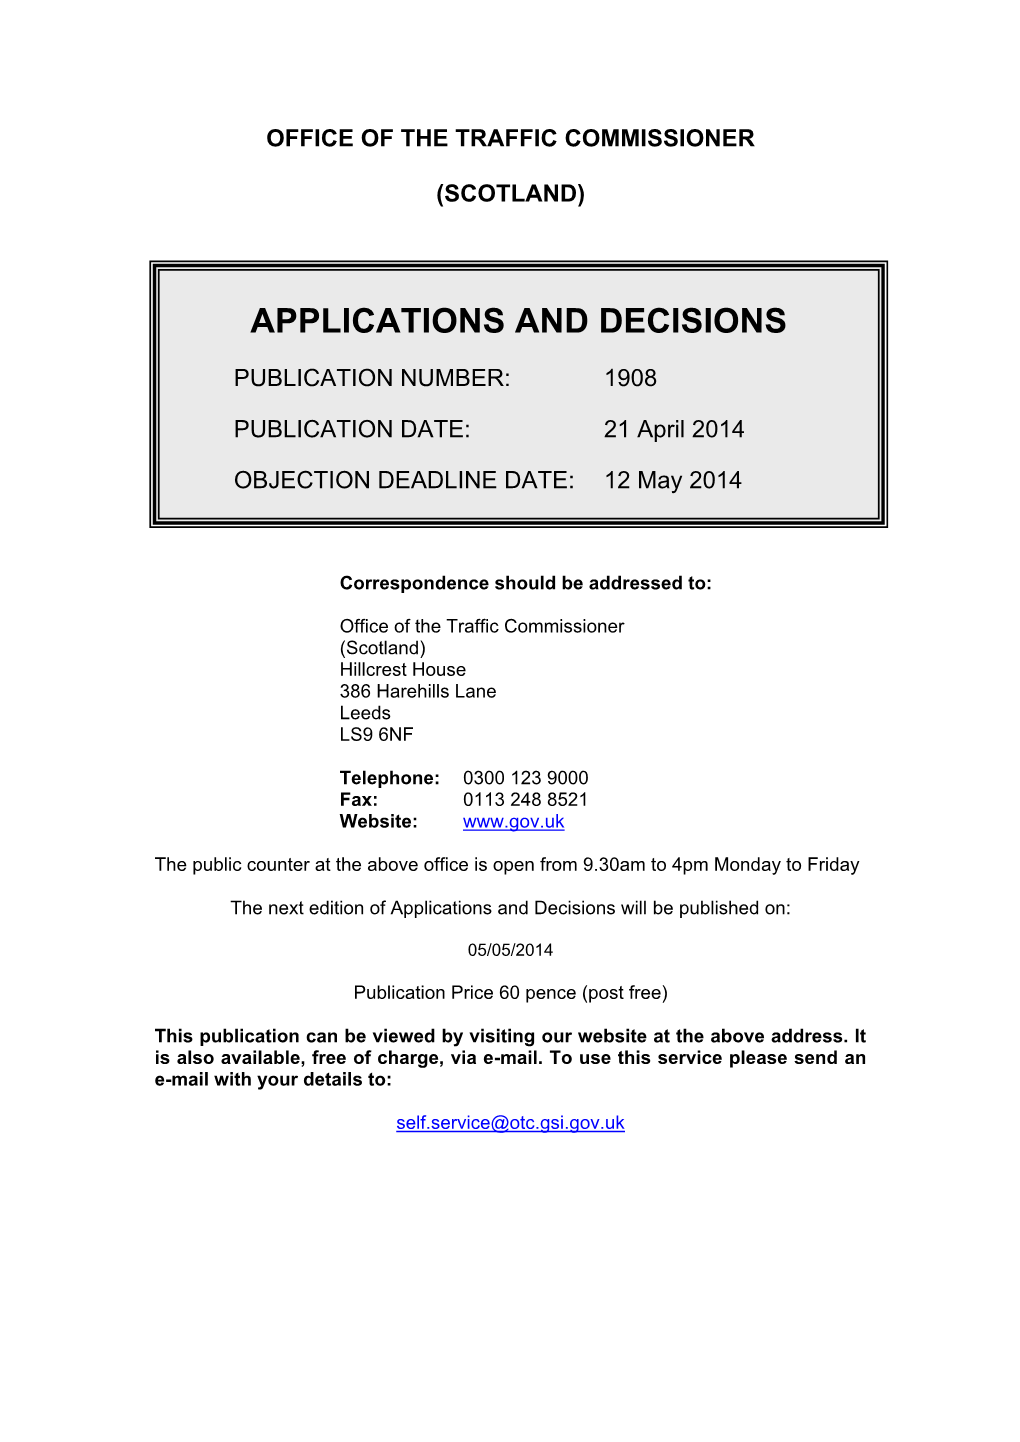 Applications and Decisions: Scotland: 21 April 2014